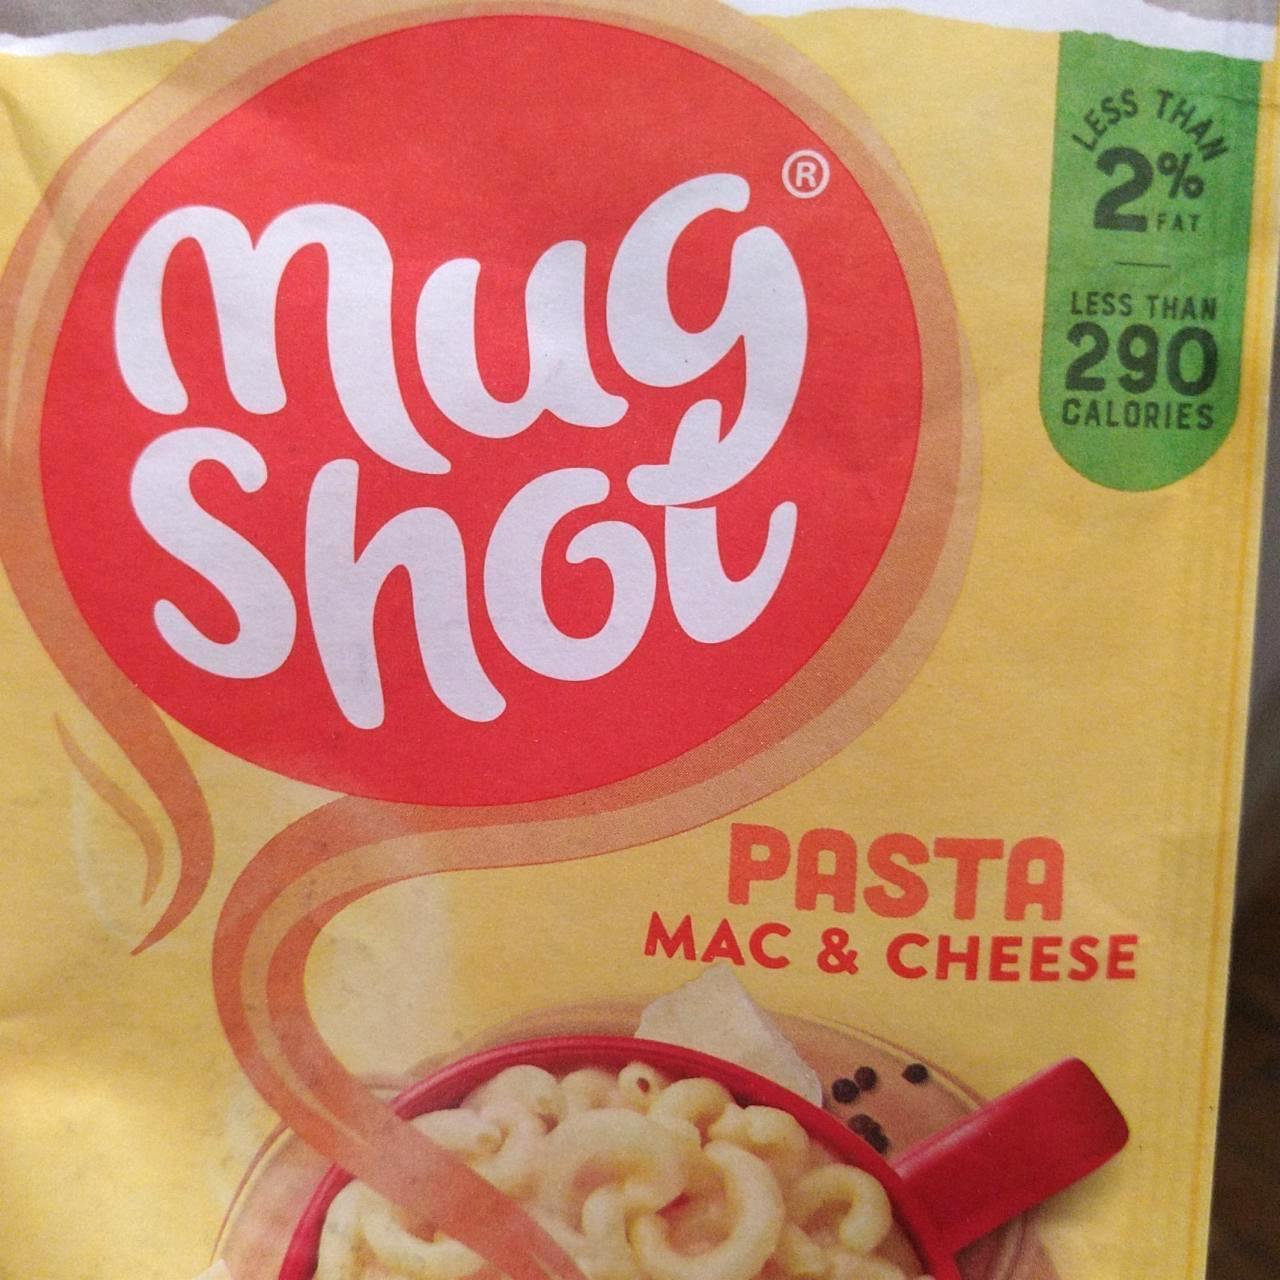 Képek - Pasta mac & cheese Mug shot